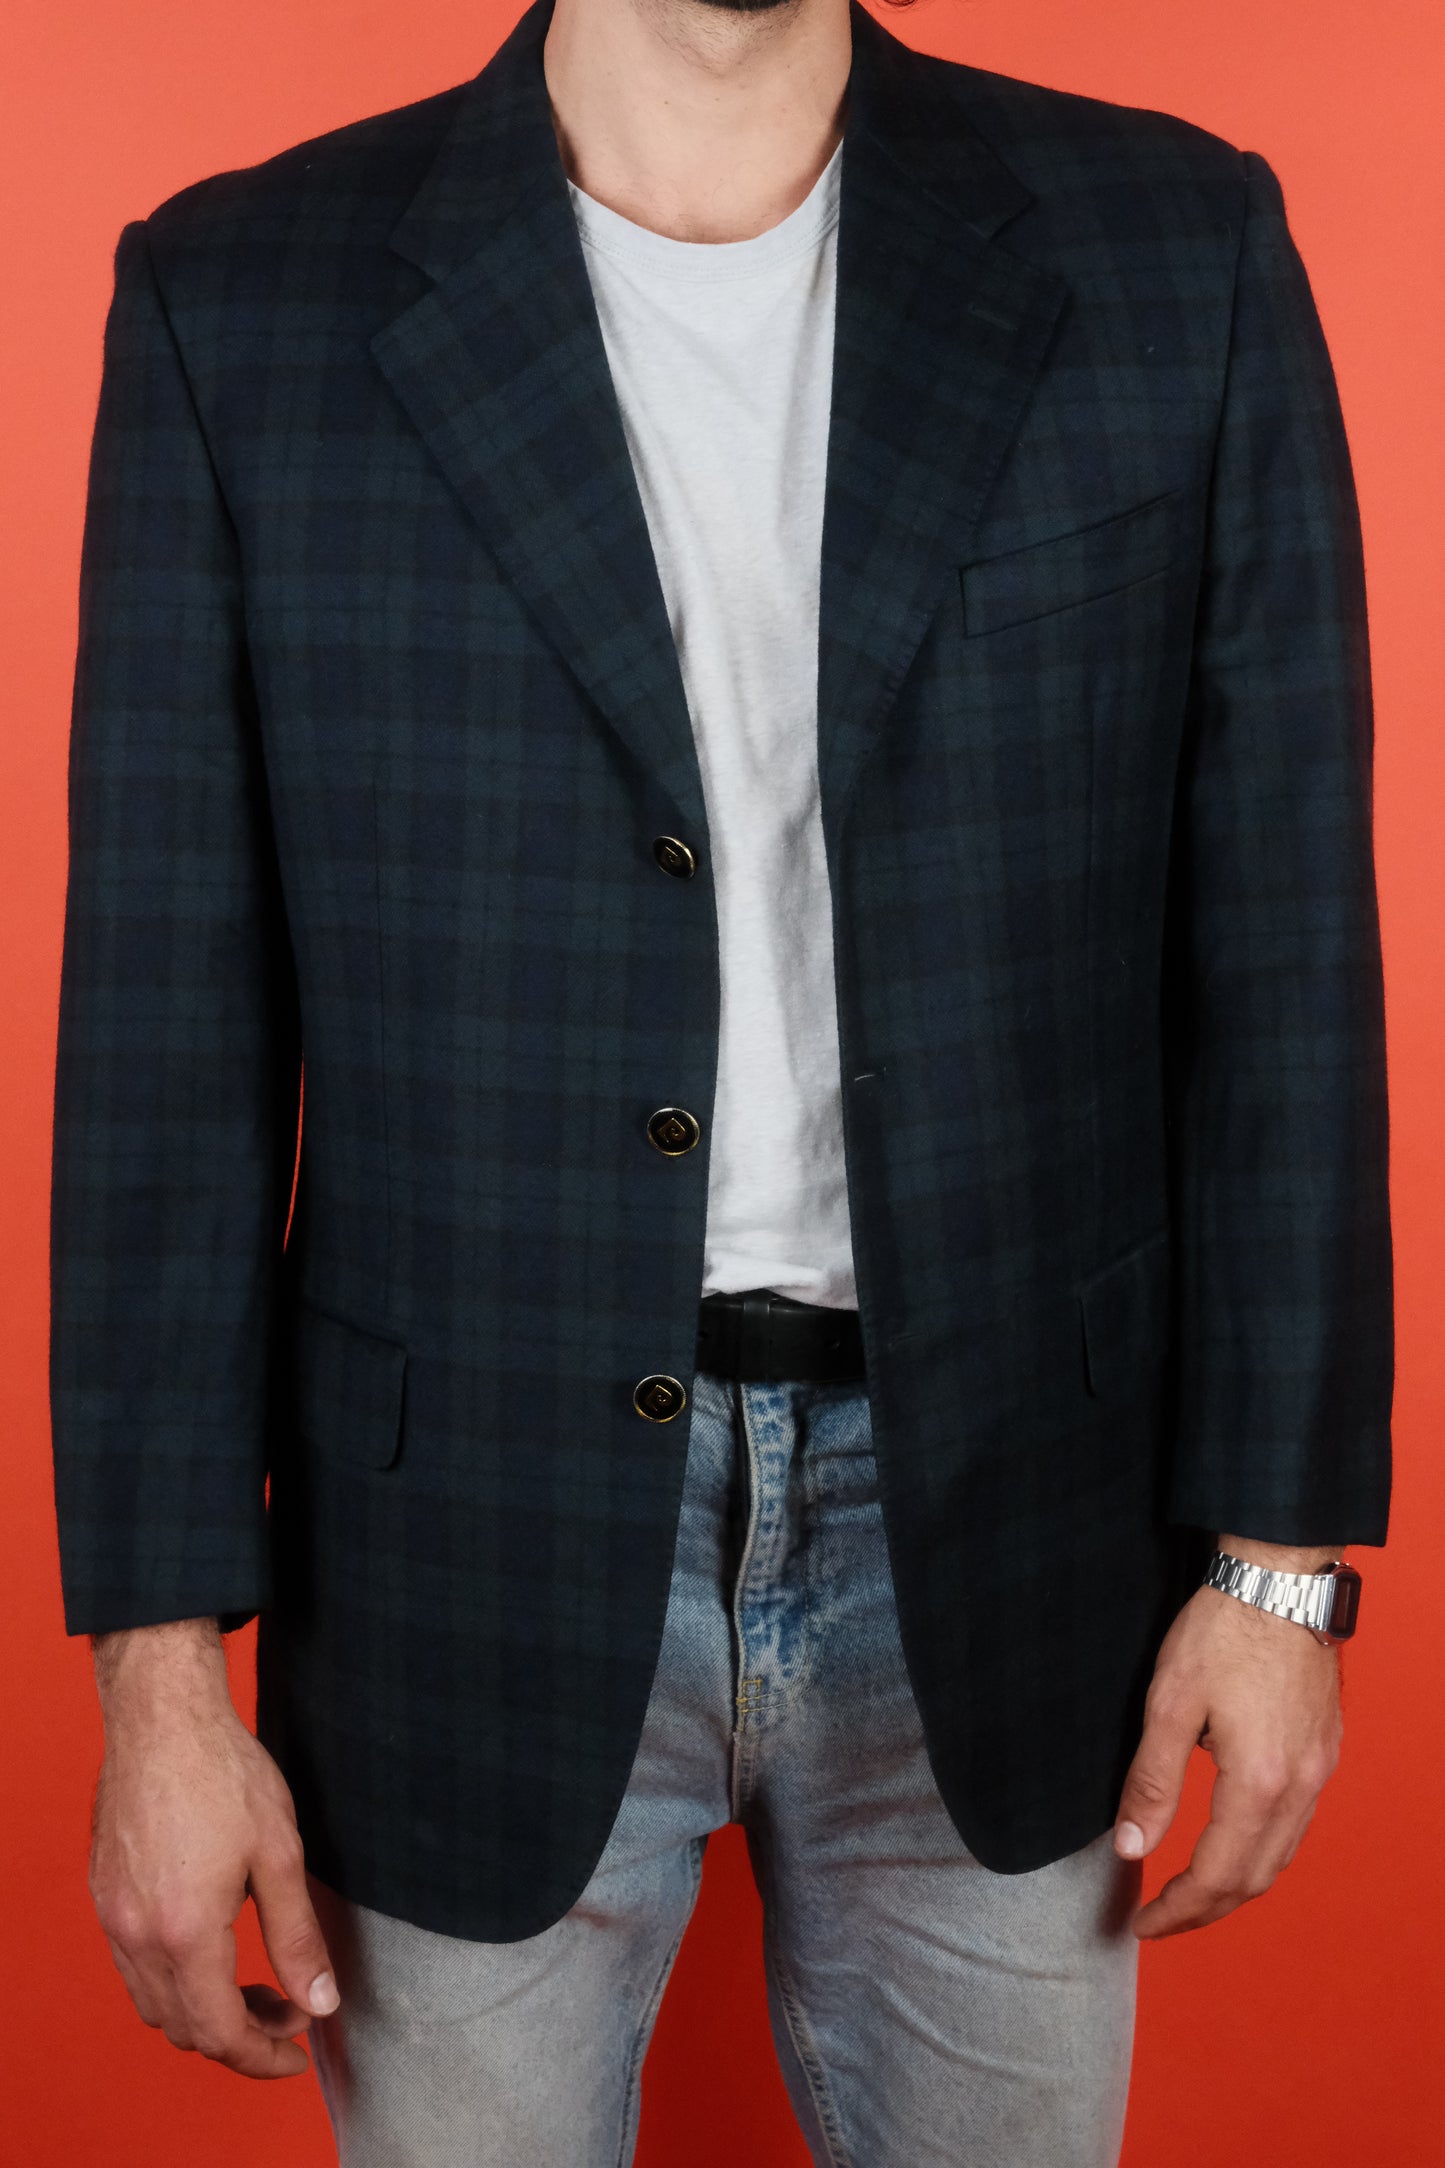 Pierre Cardin Checked Suit Jacket  - vintage clothing clochard92.com